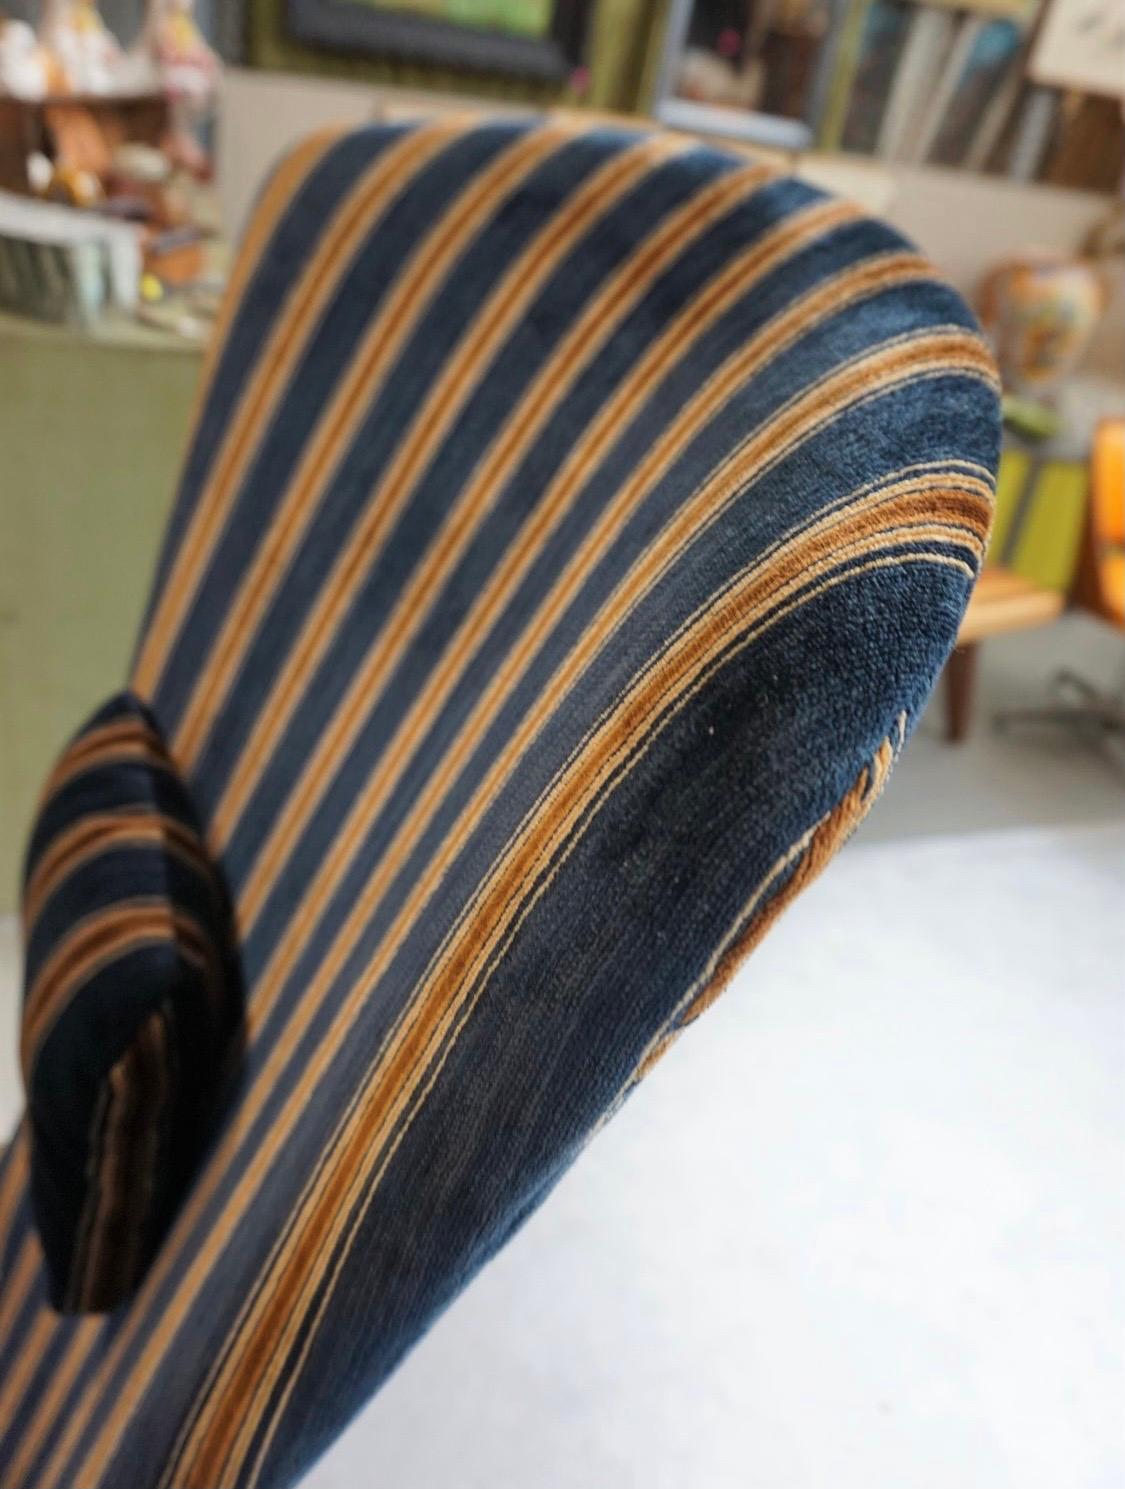 Fabric Adrian Pearsall Craft Associates Midcentury Highback Lounge Chair